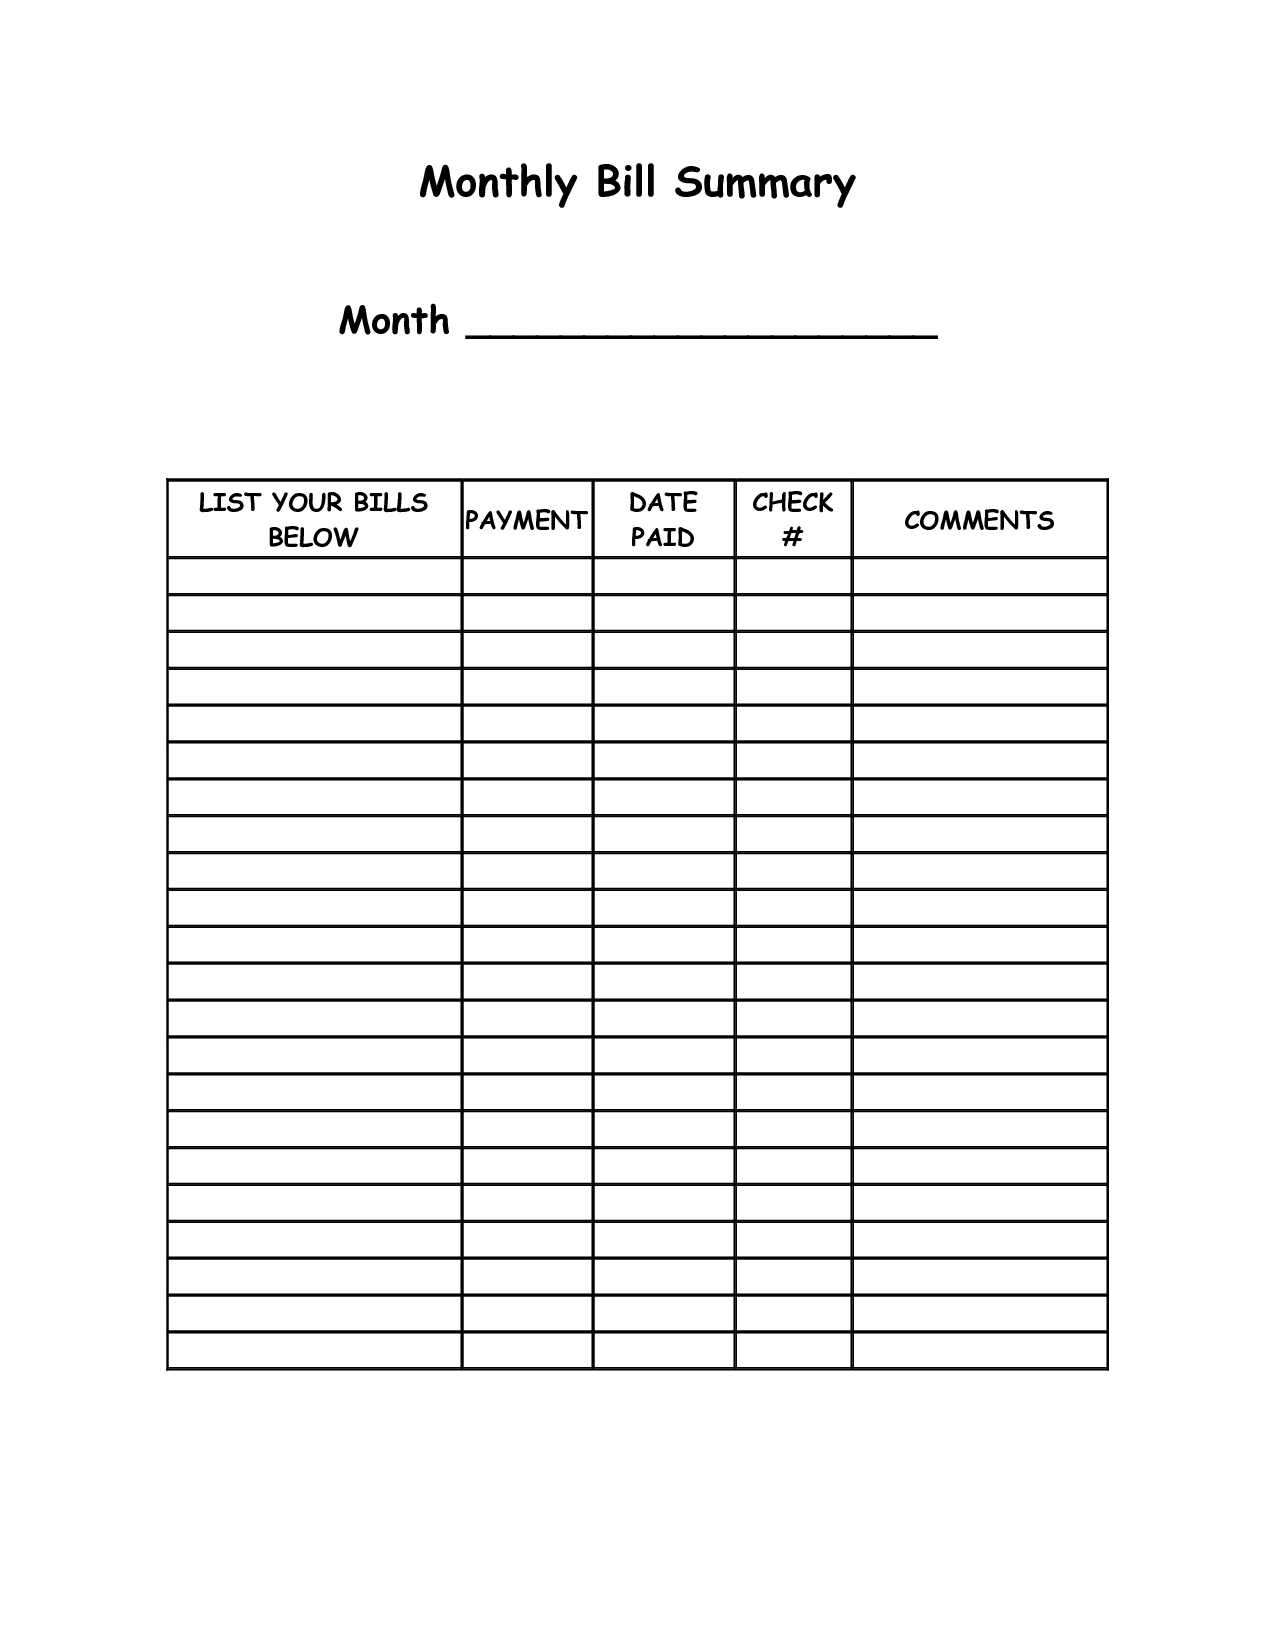 Monthly Bill Summary Doc | Organization | Organizing Monthly Bills - Free Printable Weekly Bill Organizer